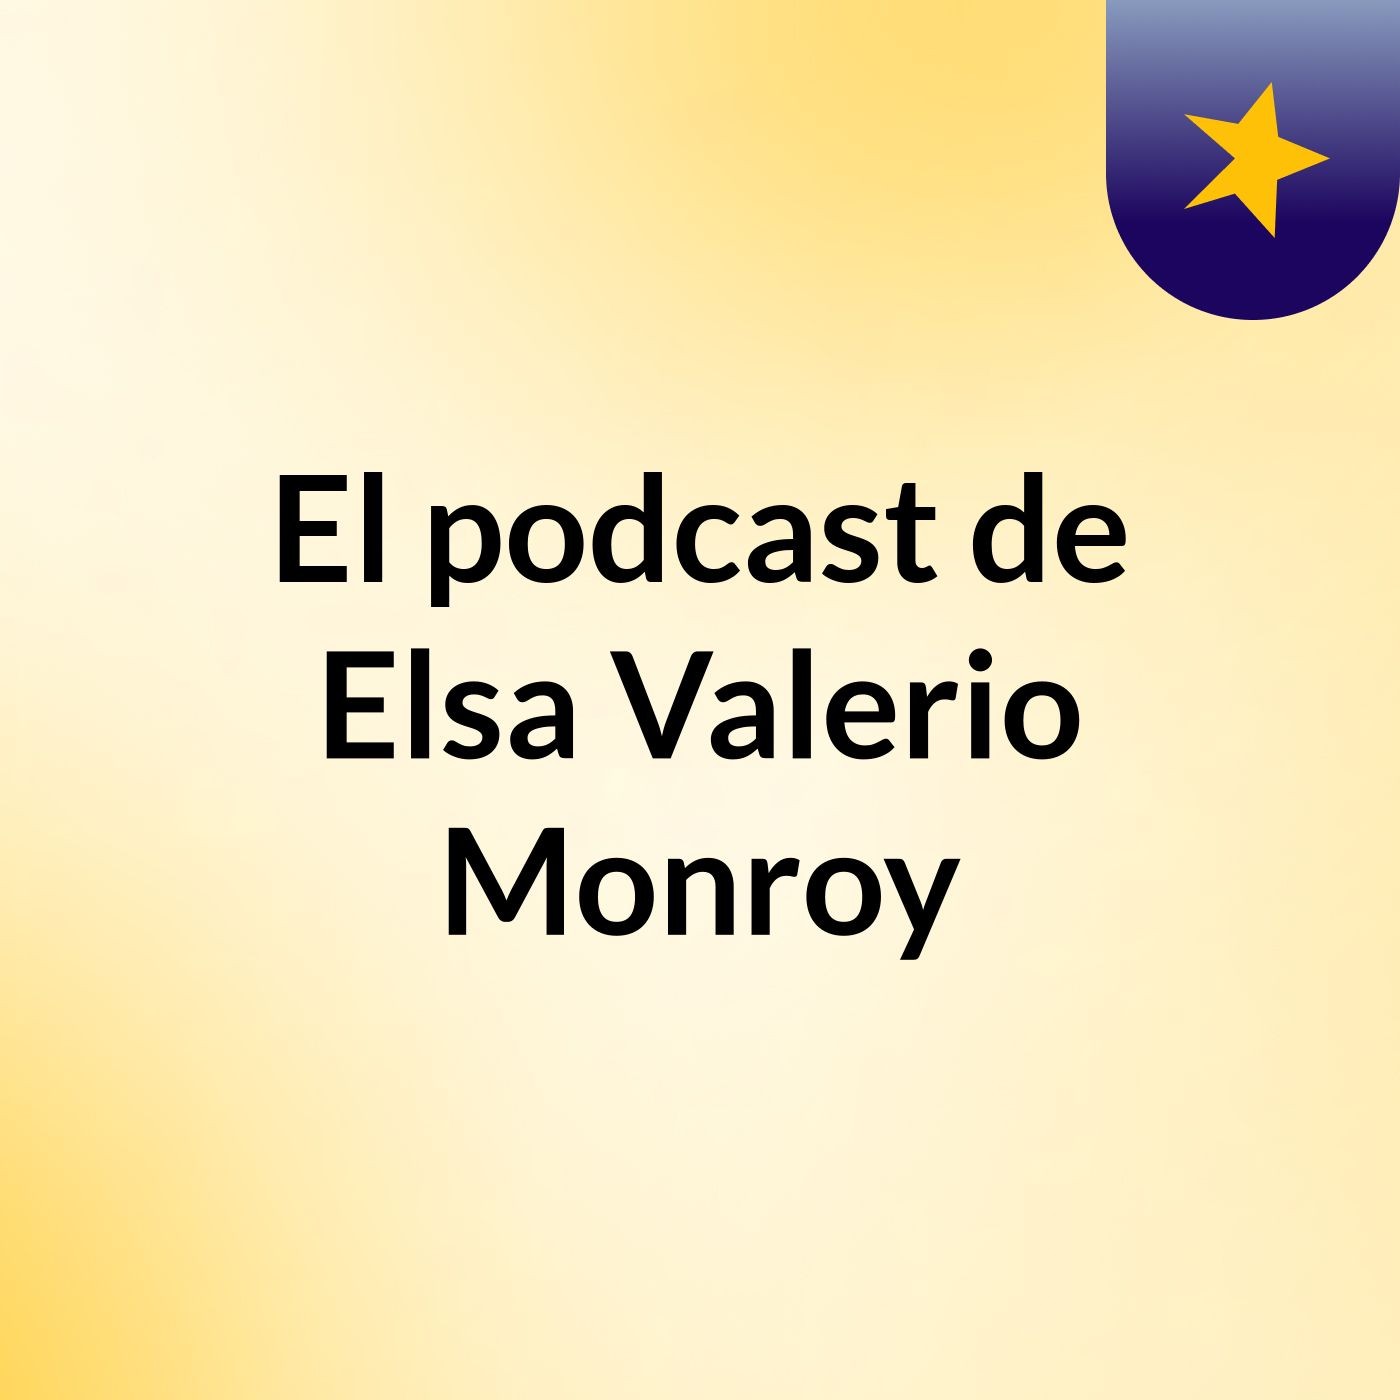 El podcast de Elsa Valerio Monroy